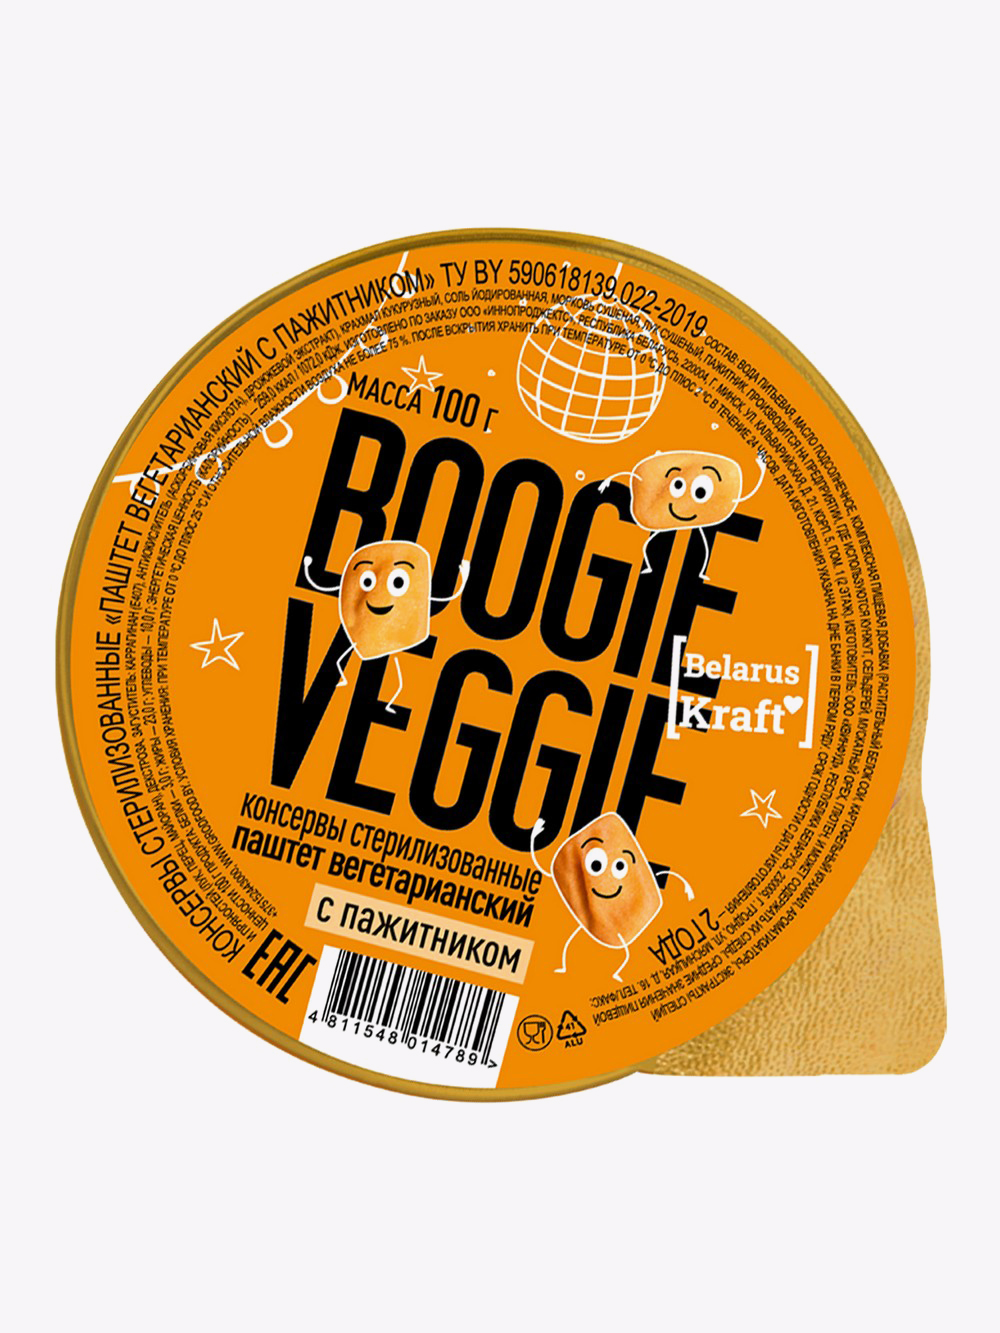 Паштет вегетарианский Boogie Veggie с пажитником 100 г